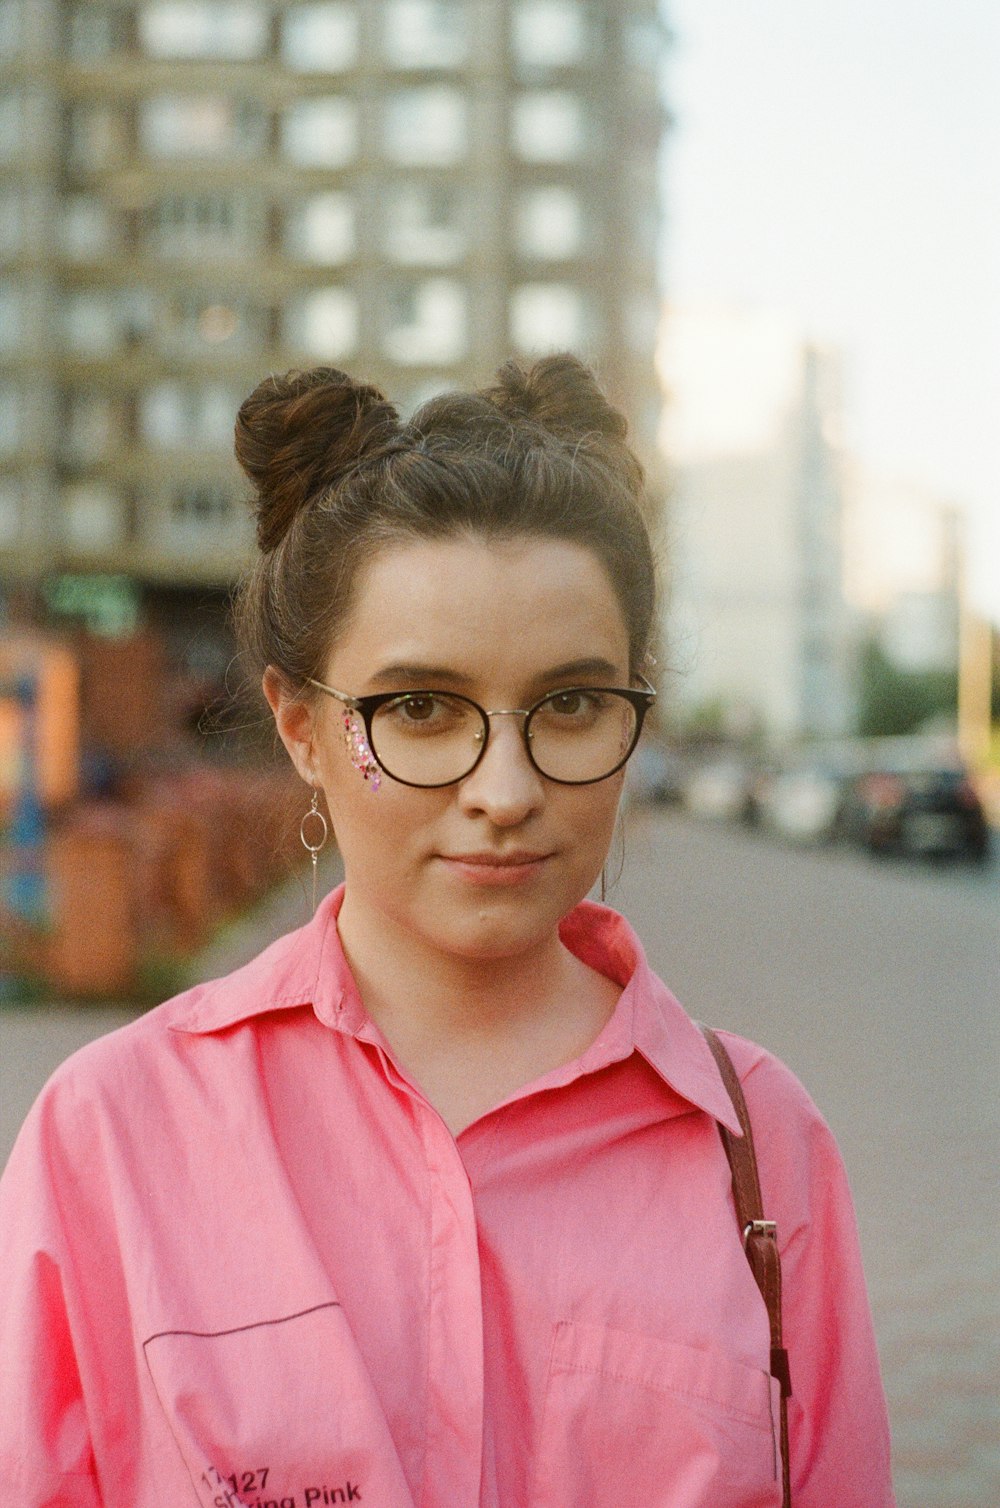 woman in pink button up shirt wearing eyeglasses